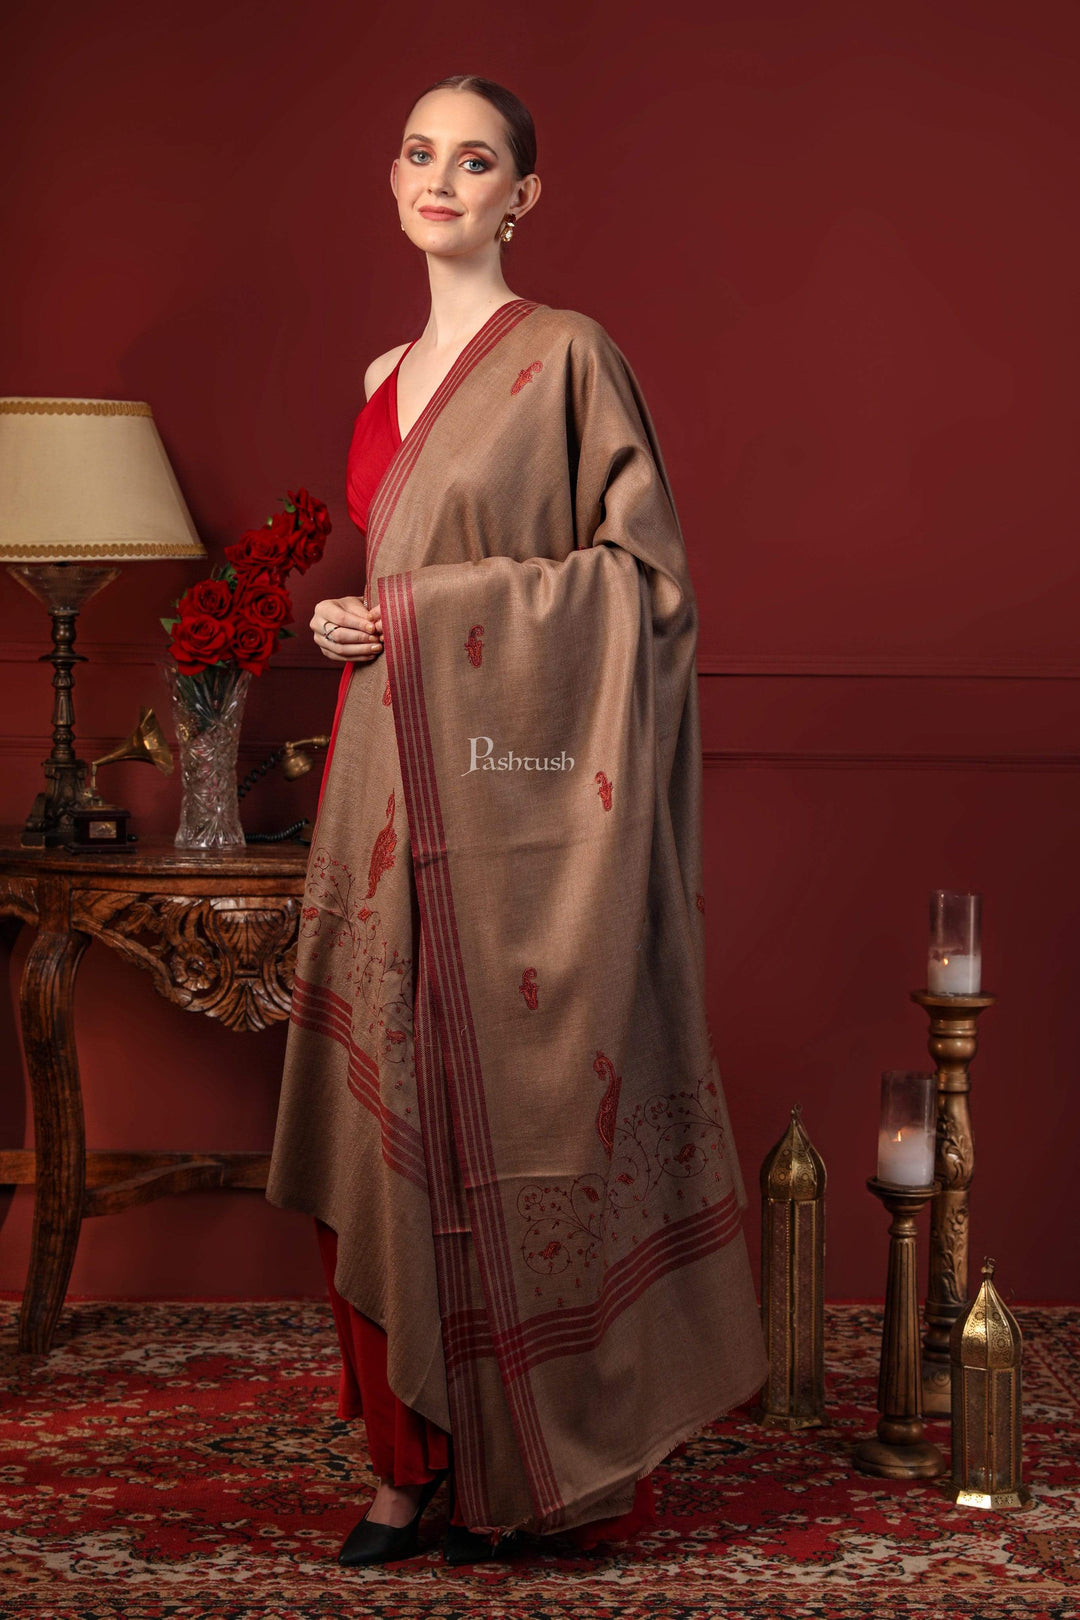 Pashtush India 114x228 Pashtush Womens Embroidery Shawl, Large and Warm